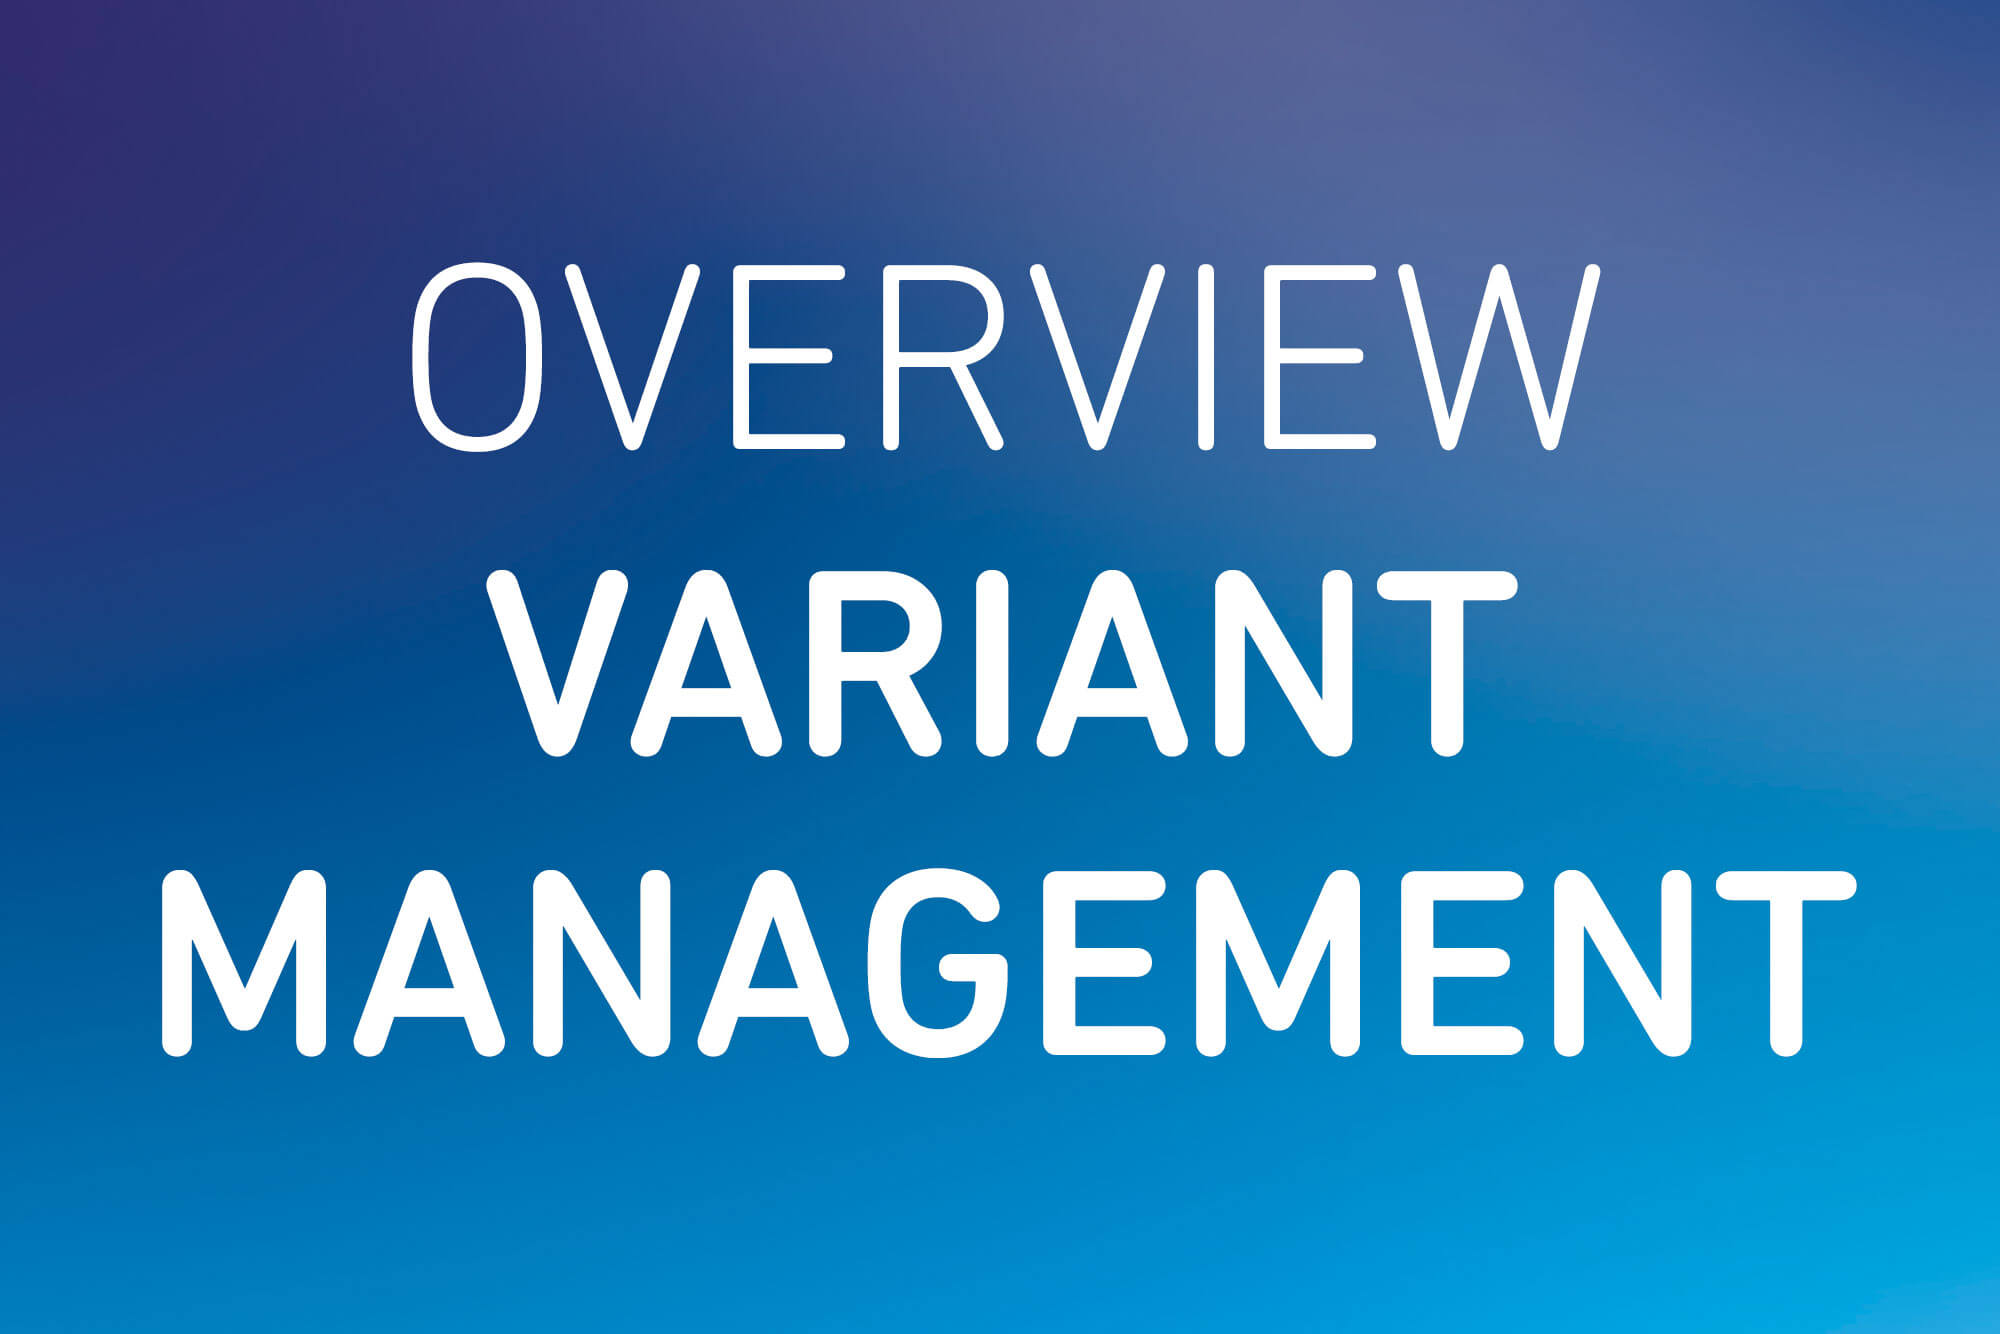 Overview Variant Management